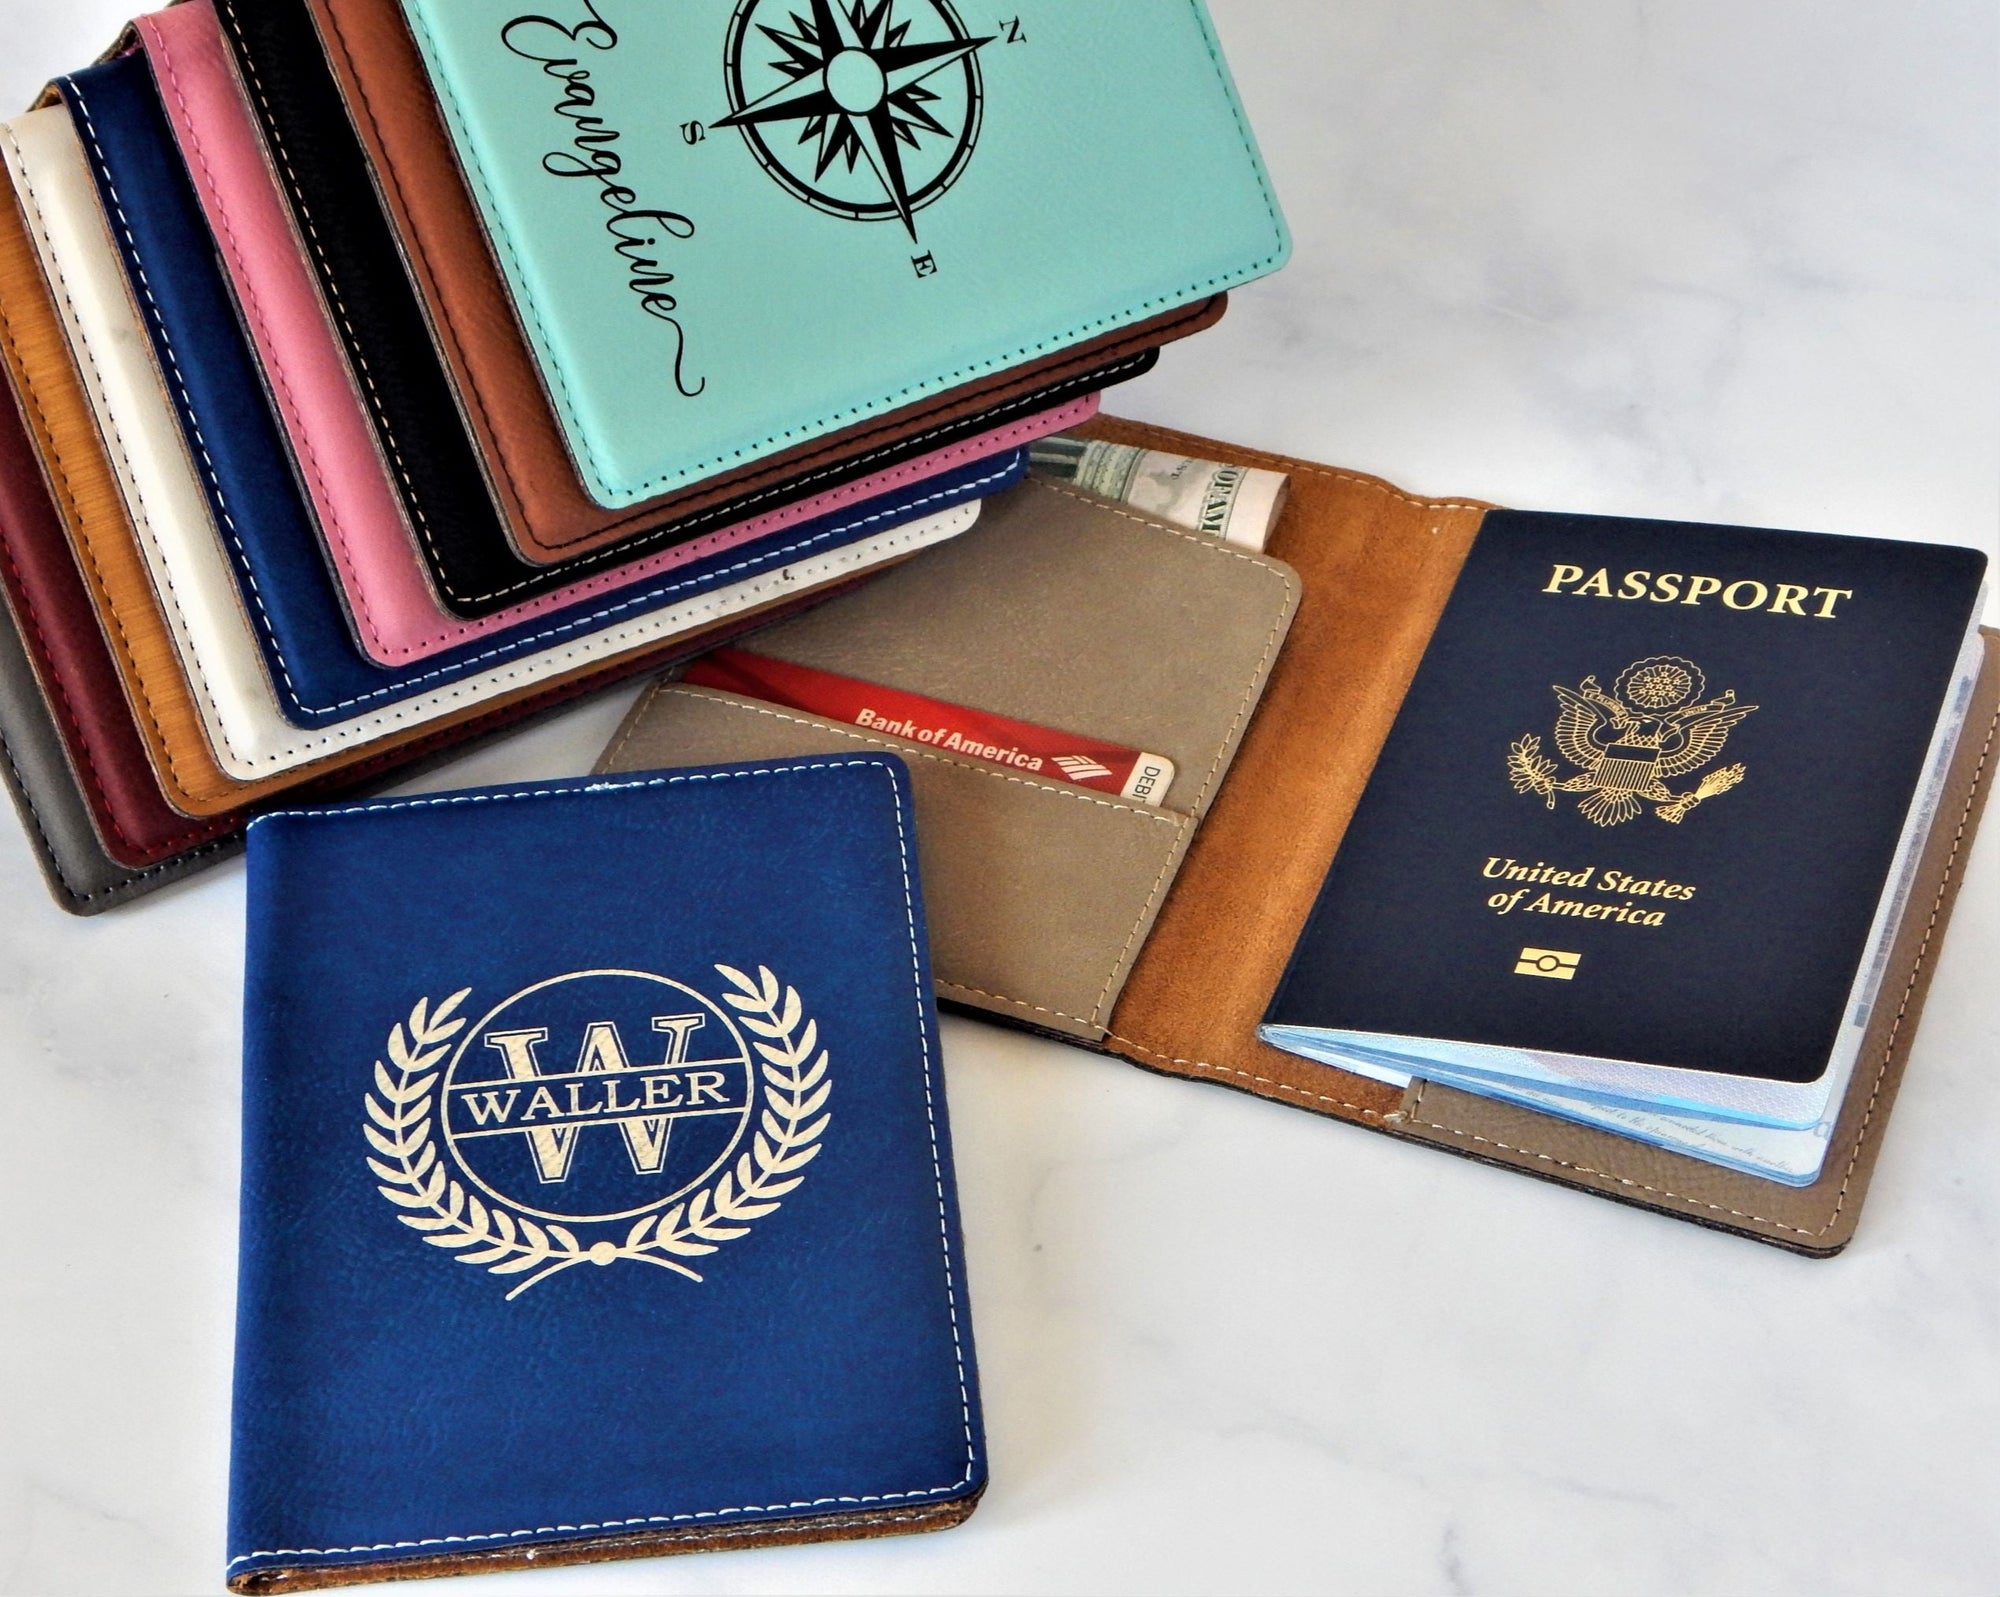 Passport Cover Case | Leatherette Passport Holder